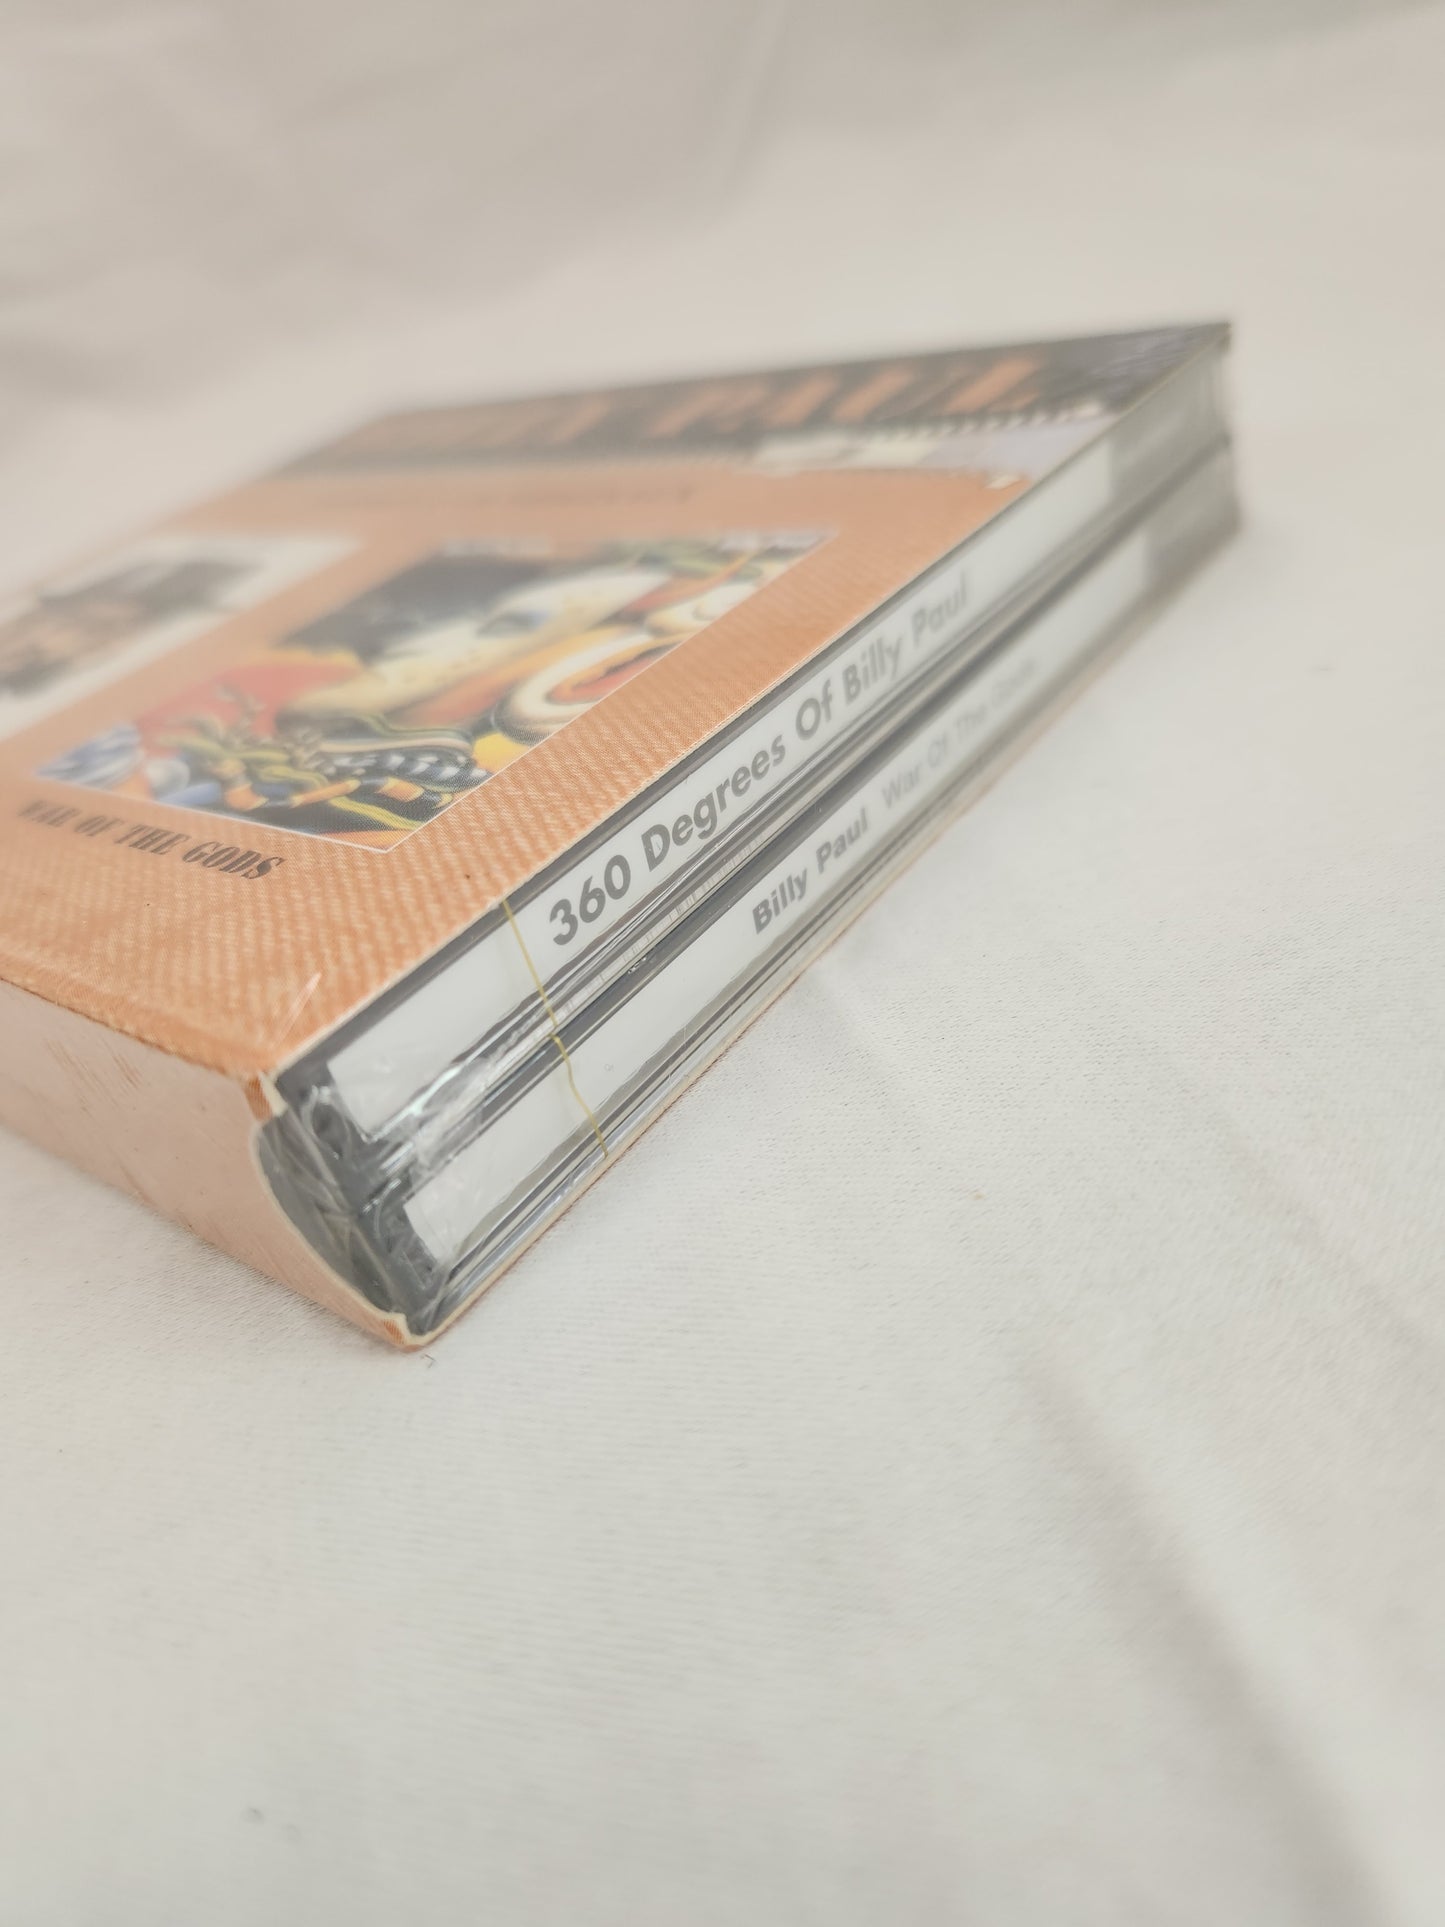 1997 - Billy Paul: Coffret 2-CD Originaux Box Set